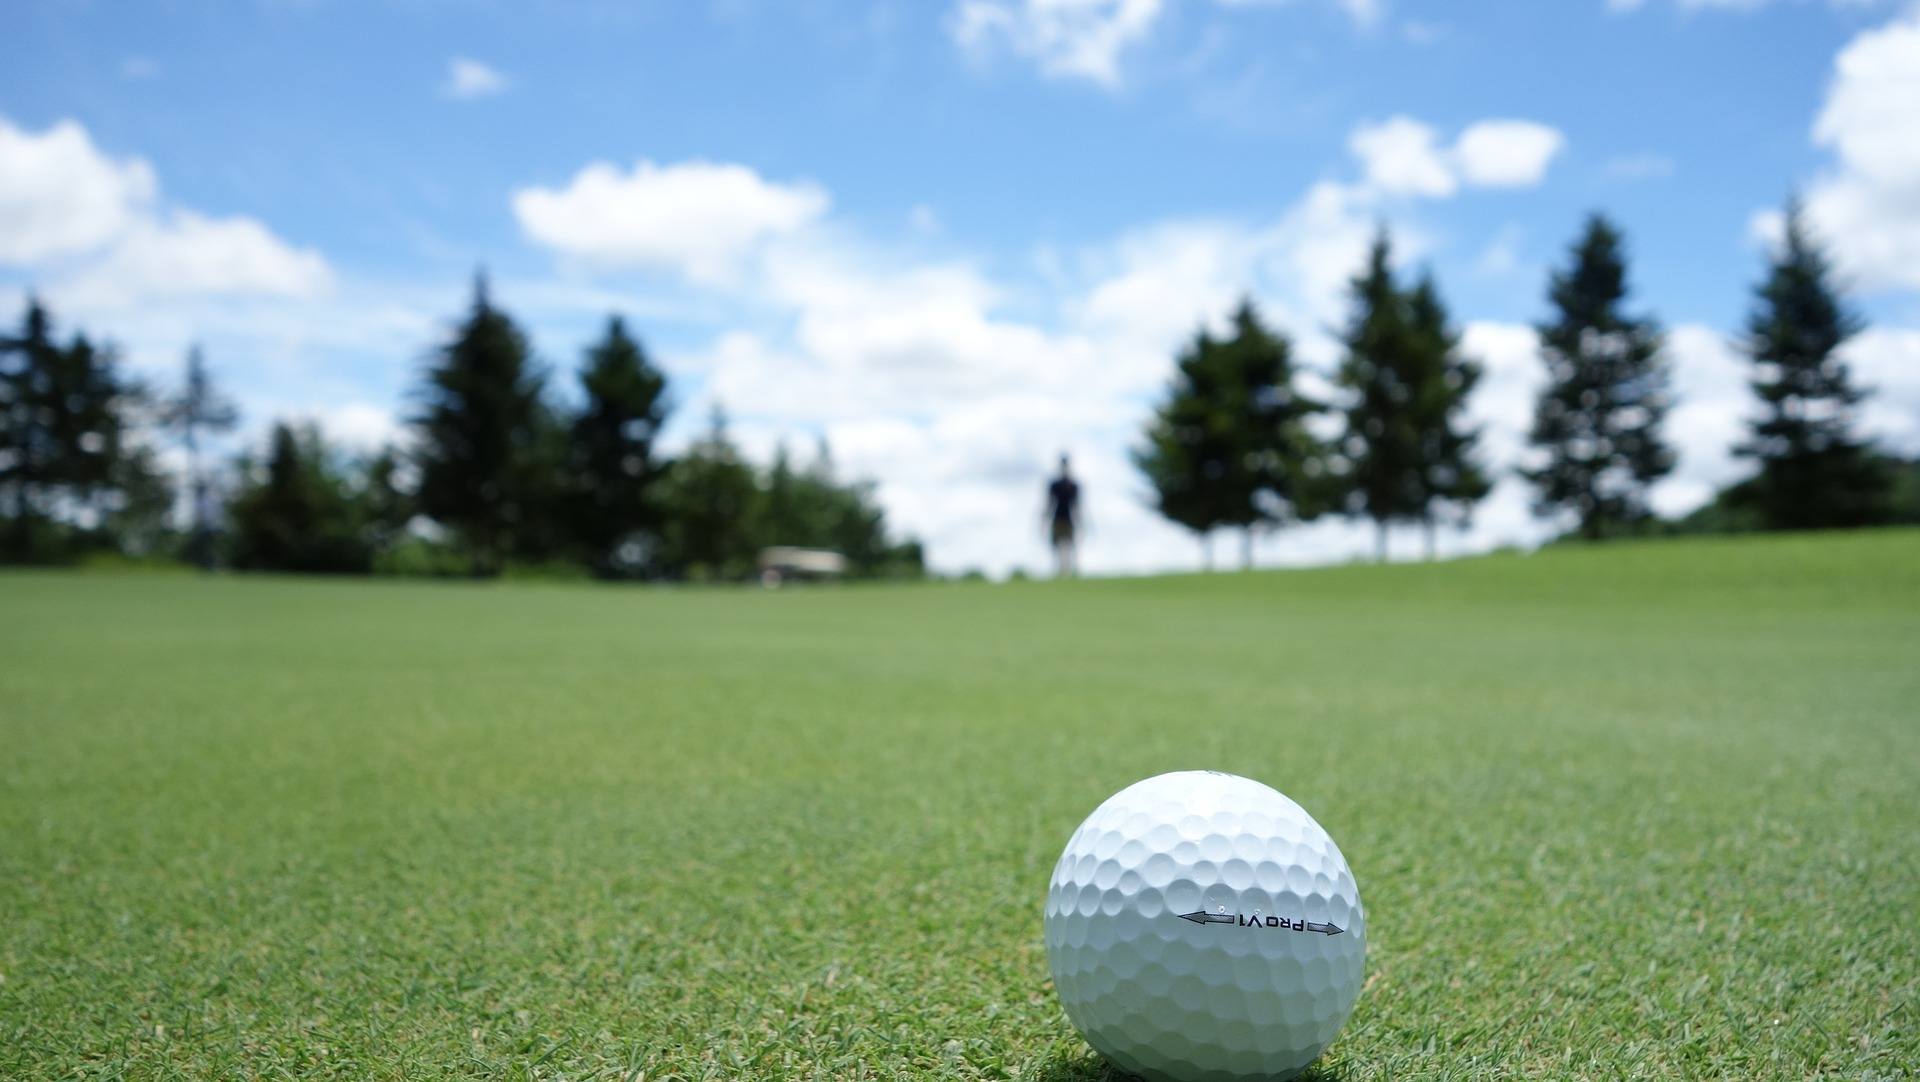 9-hole golf course